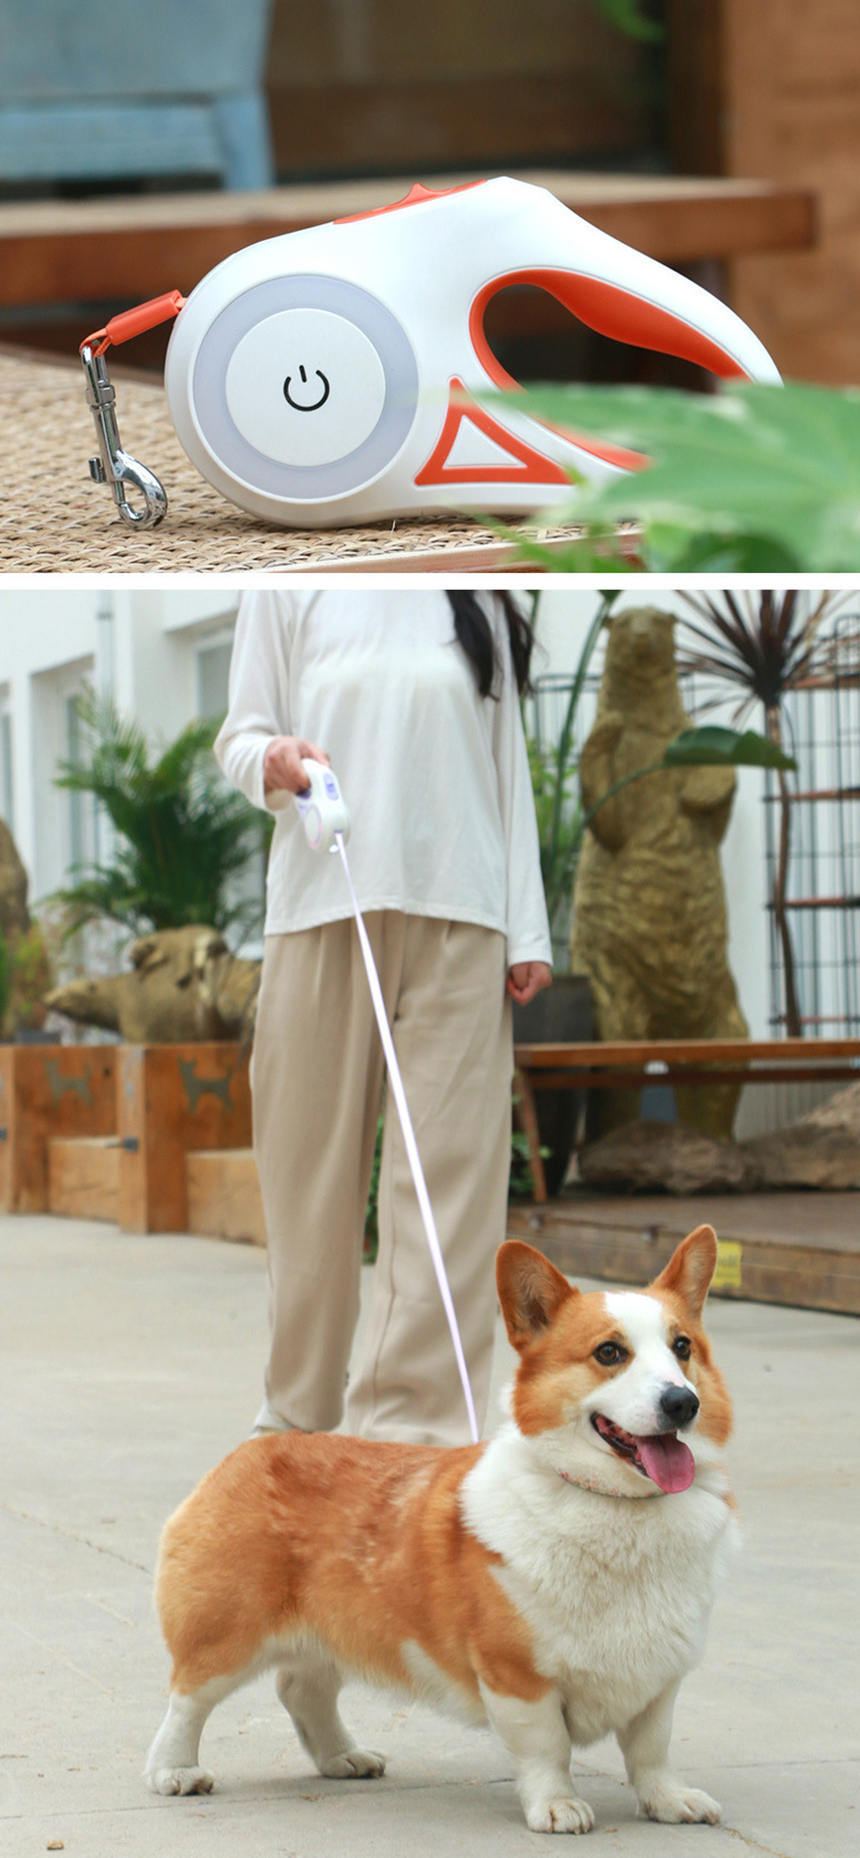 Nylon-Retractable-Dog-Leash-LED-Flashlight-Automatic-Extending-Walking-Leads-Traction-Rope-Dog-Suppl-1887559-7